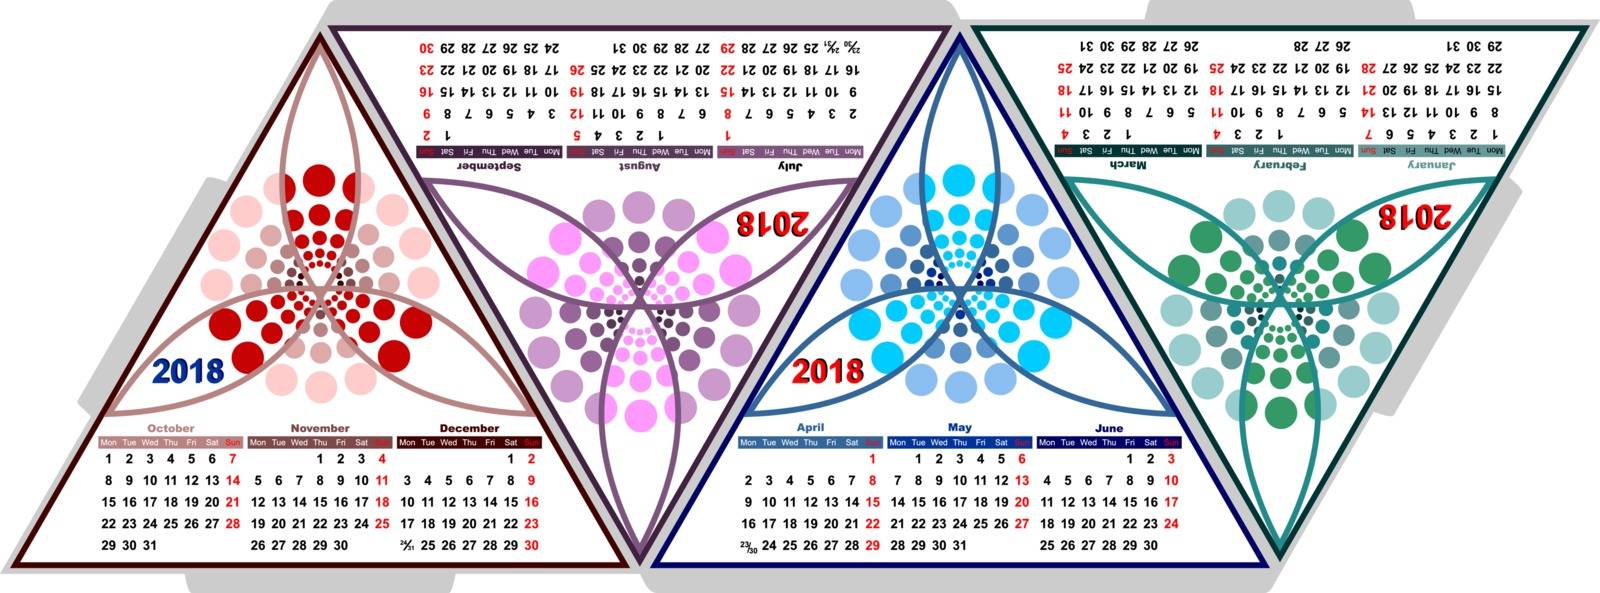 The model of the volumetric calendar by Koriolis